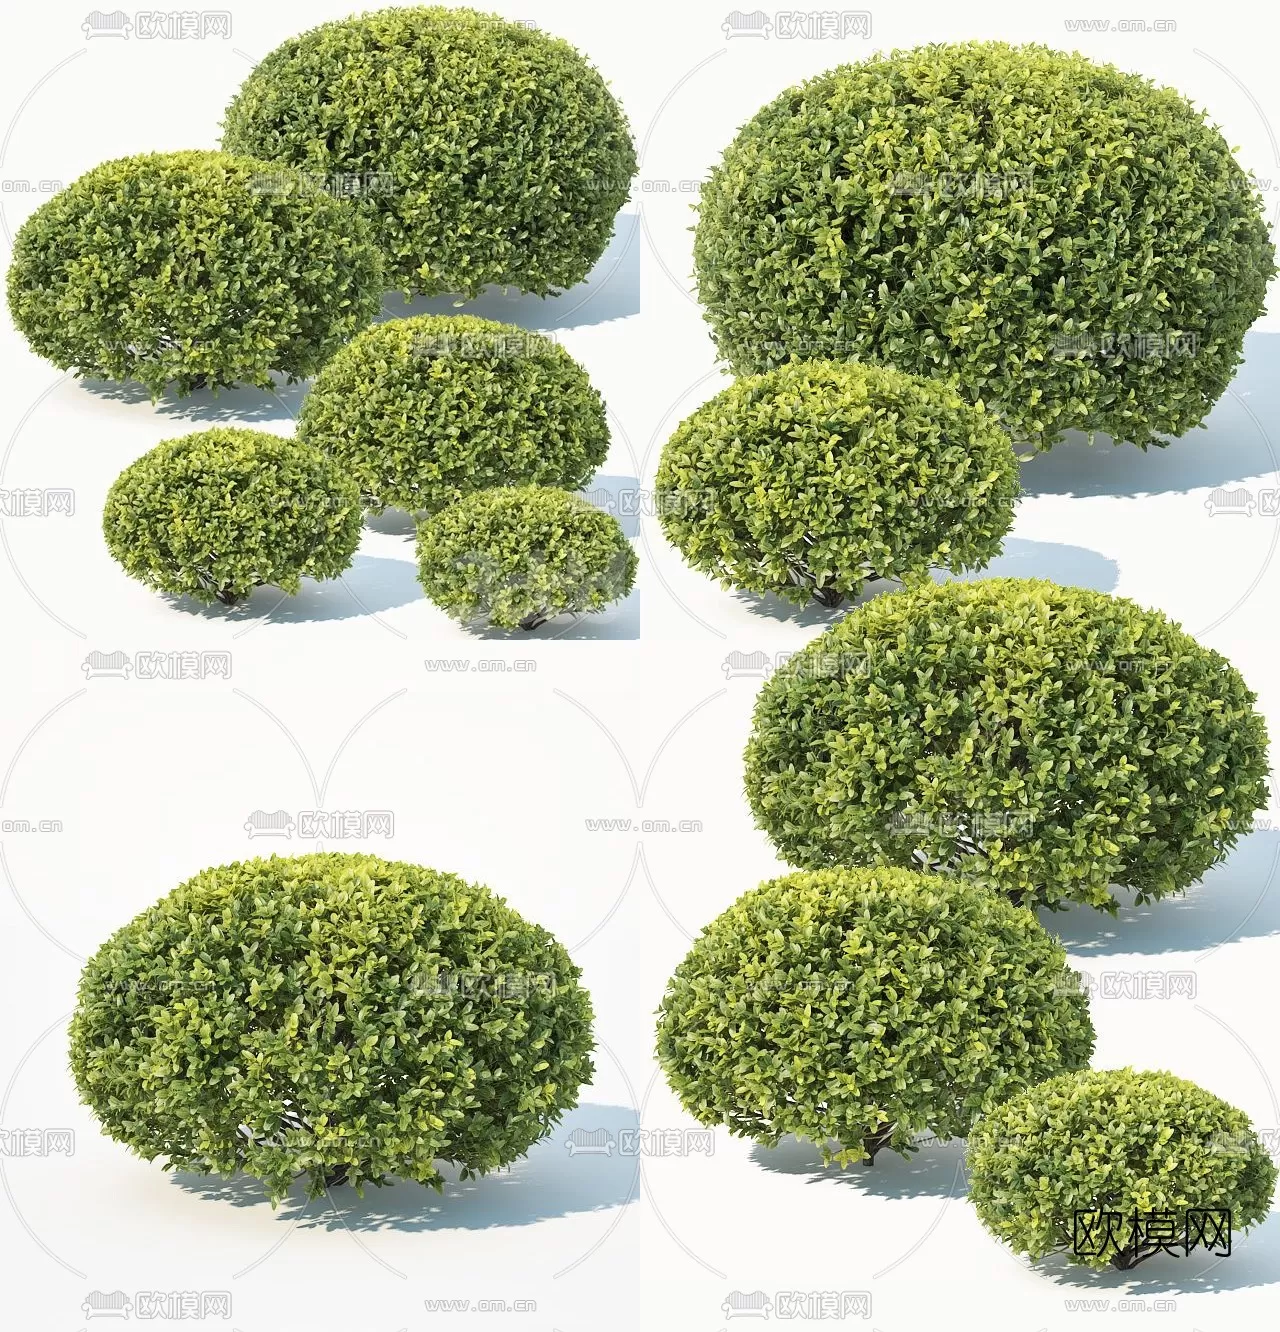 TREE – PLANTS – 3DS MAX MODELS – 040 – PRO